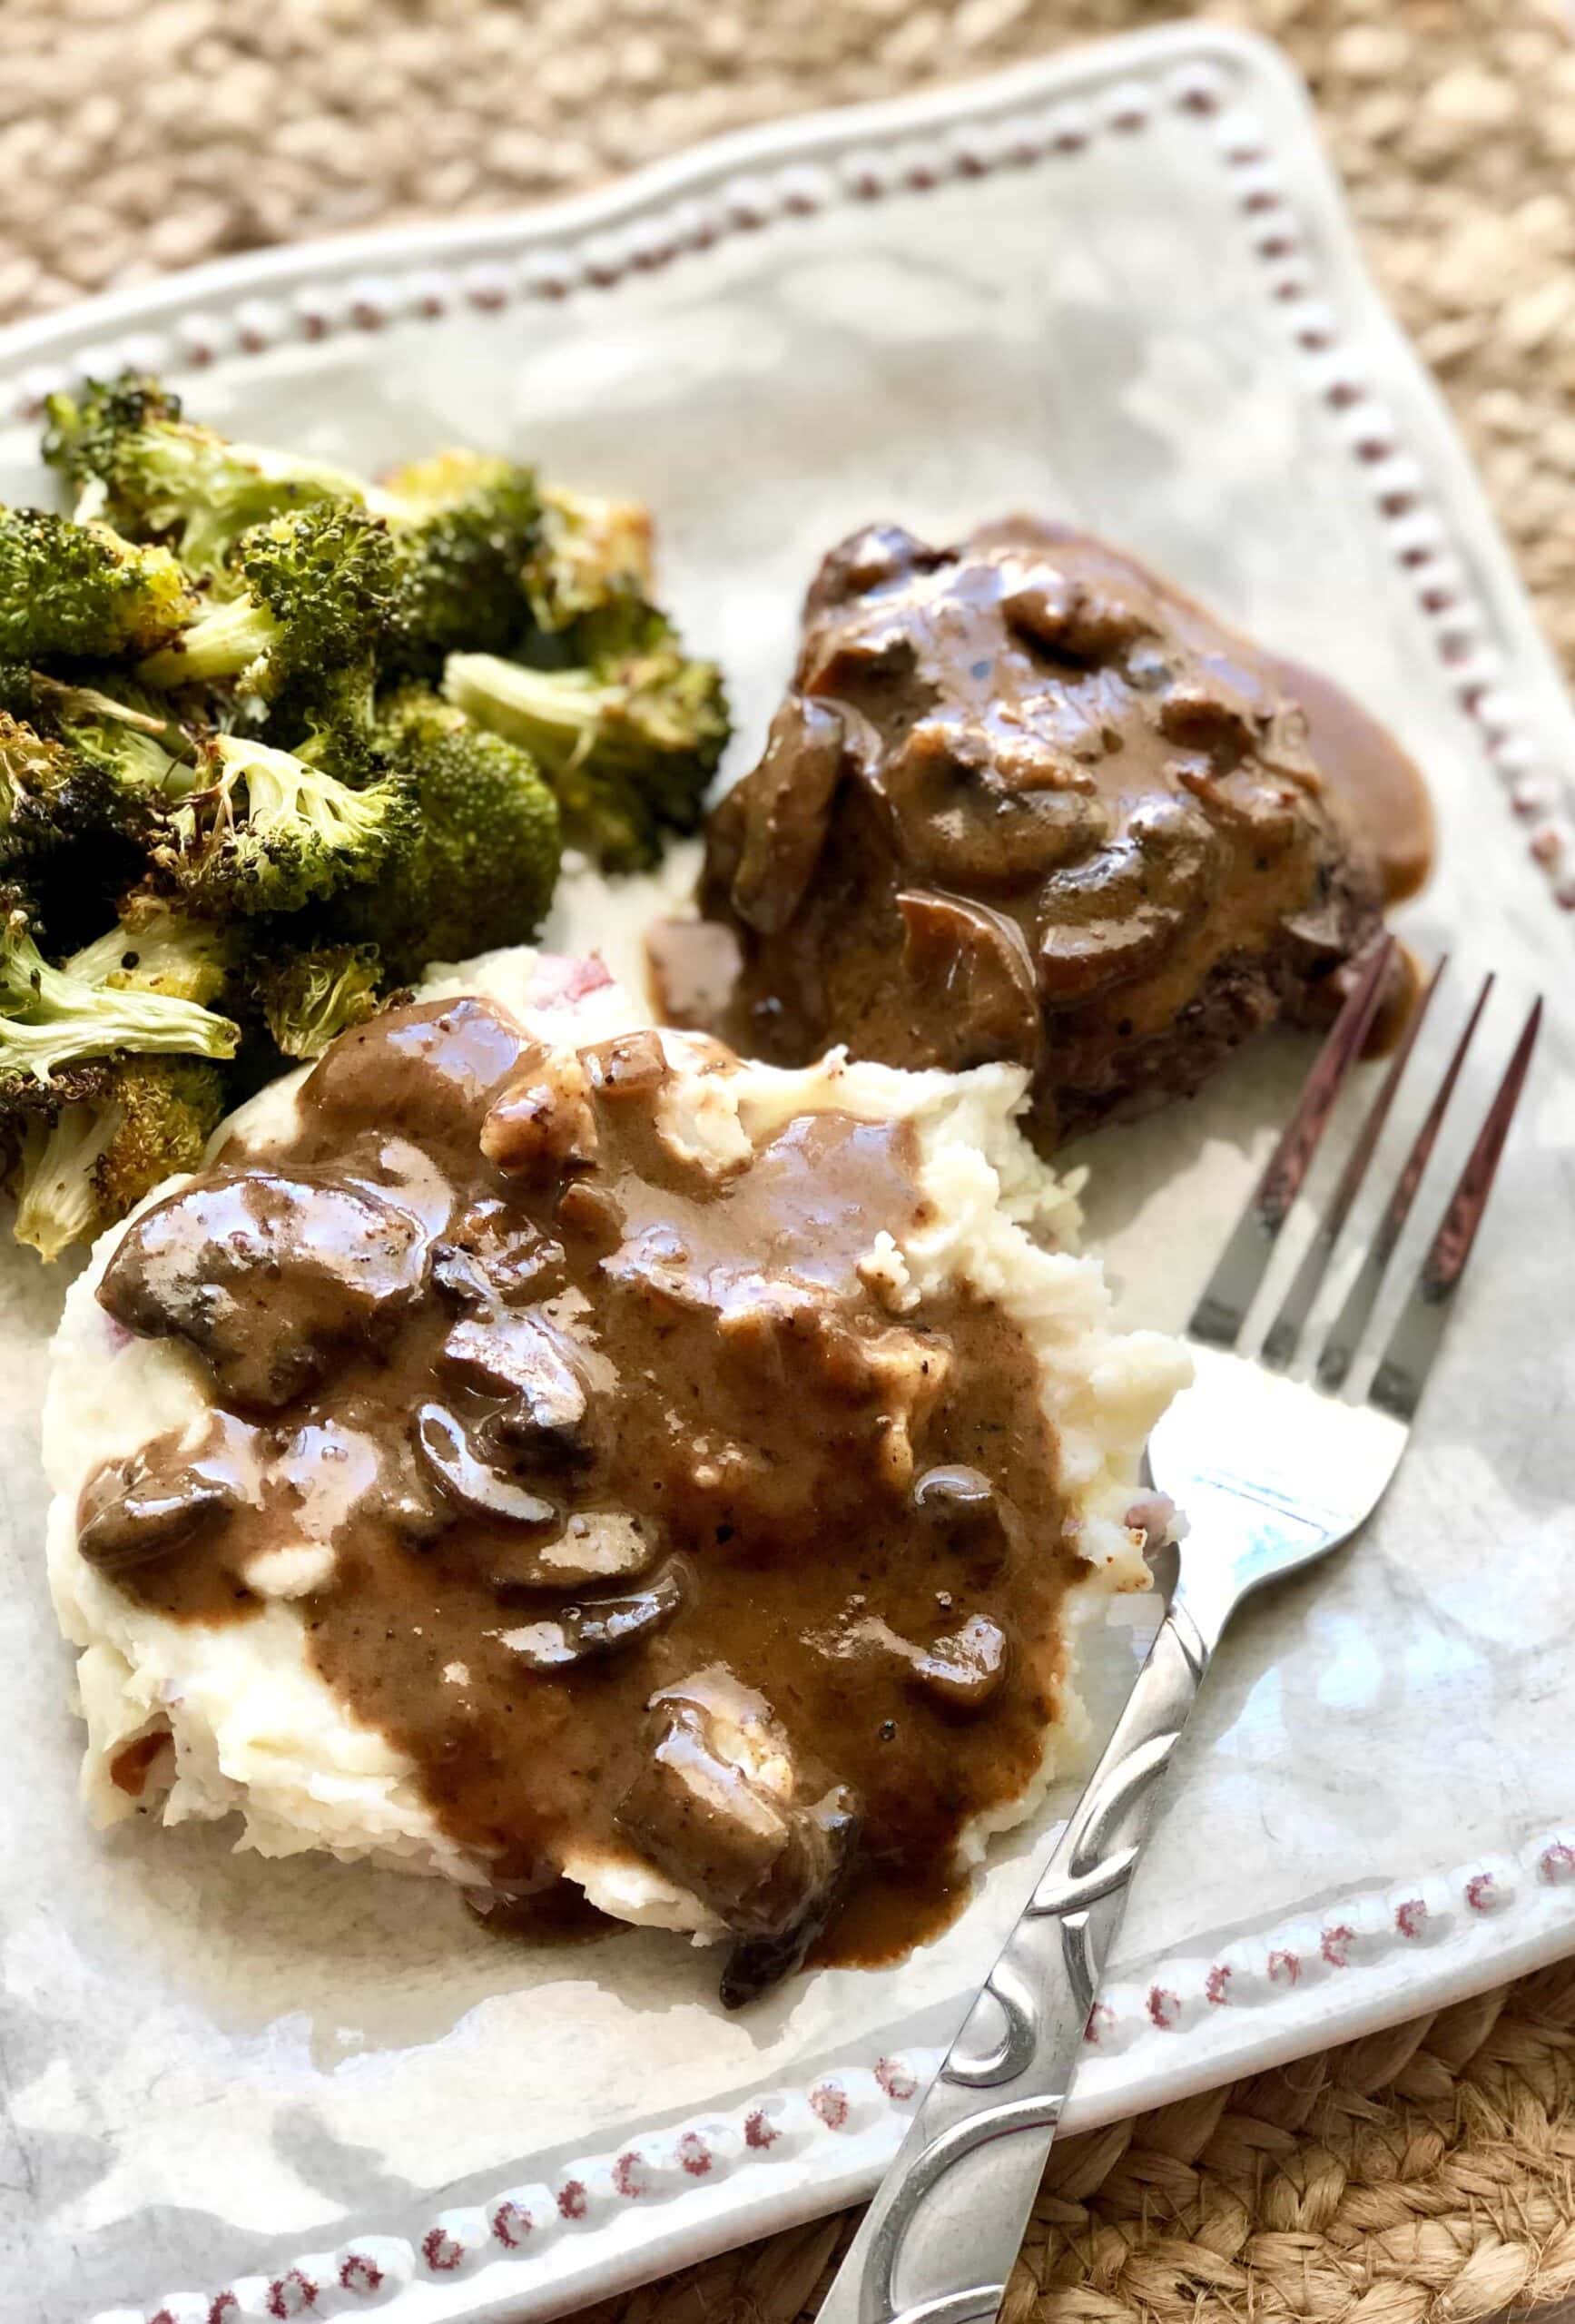 beef tenderloin marsala on plate with potatoes and broccoli